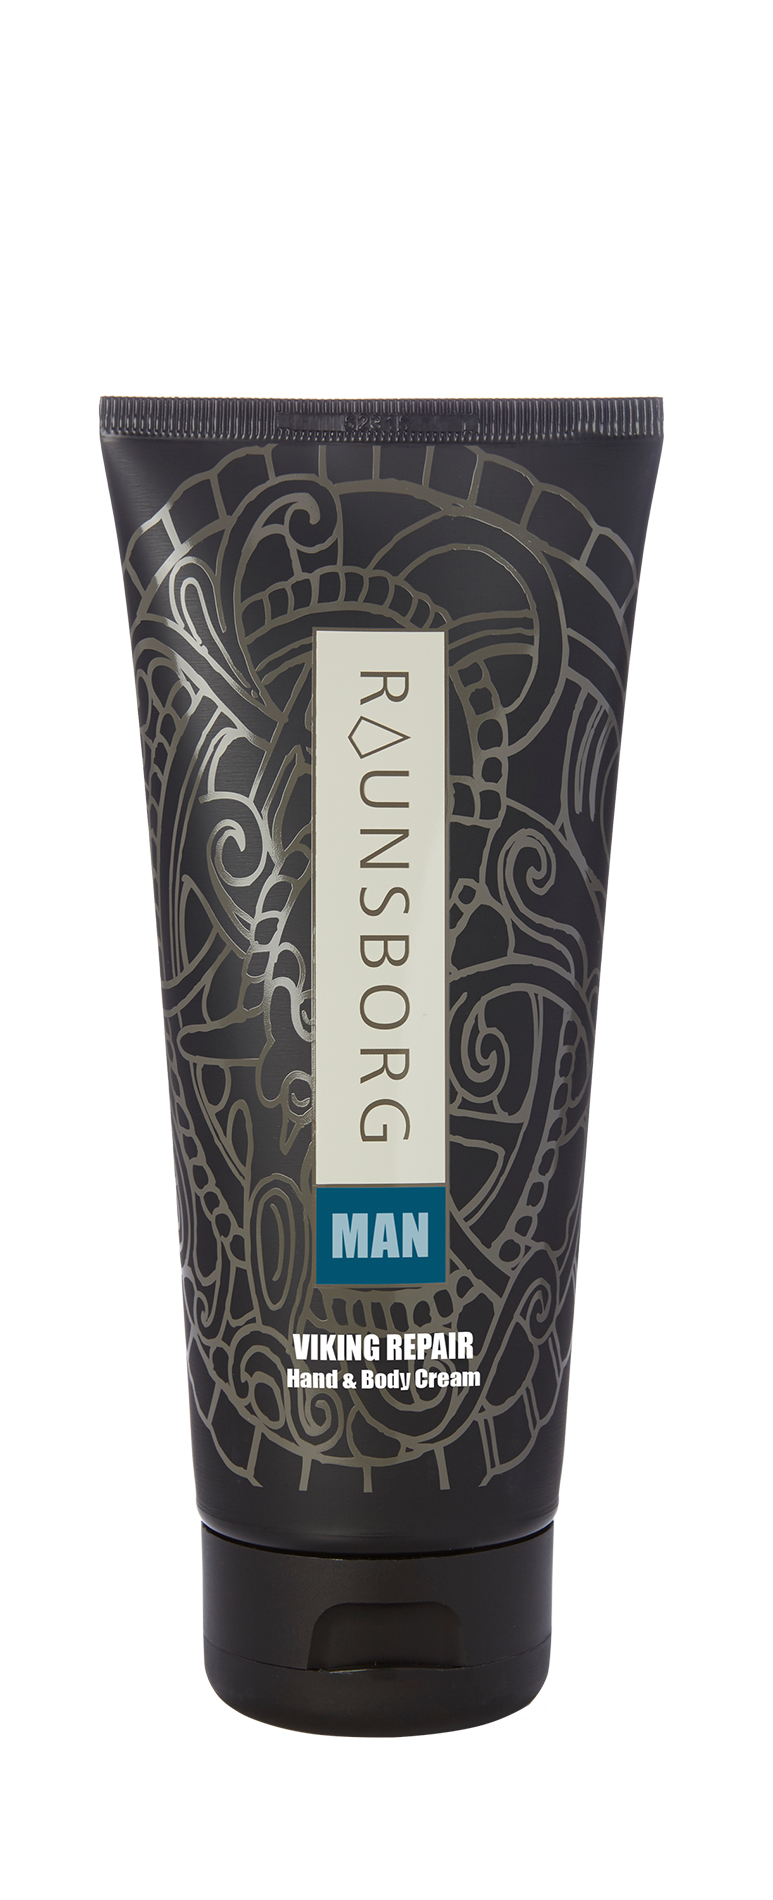 Billede af Raunsborg Man Viking Repair Hand & Body Cream 200 ml.